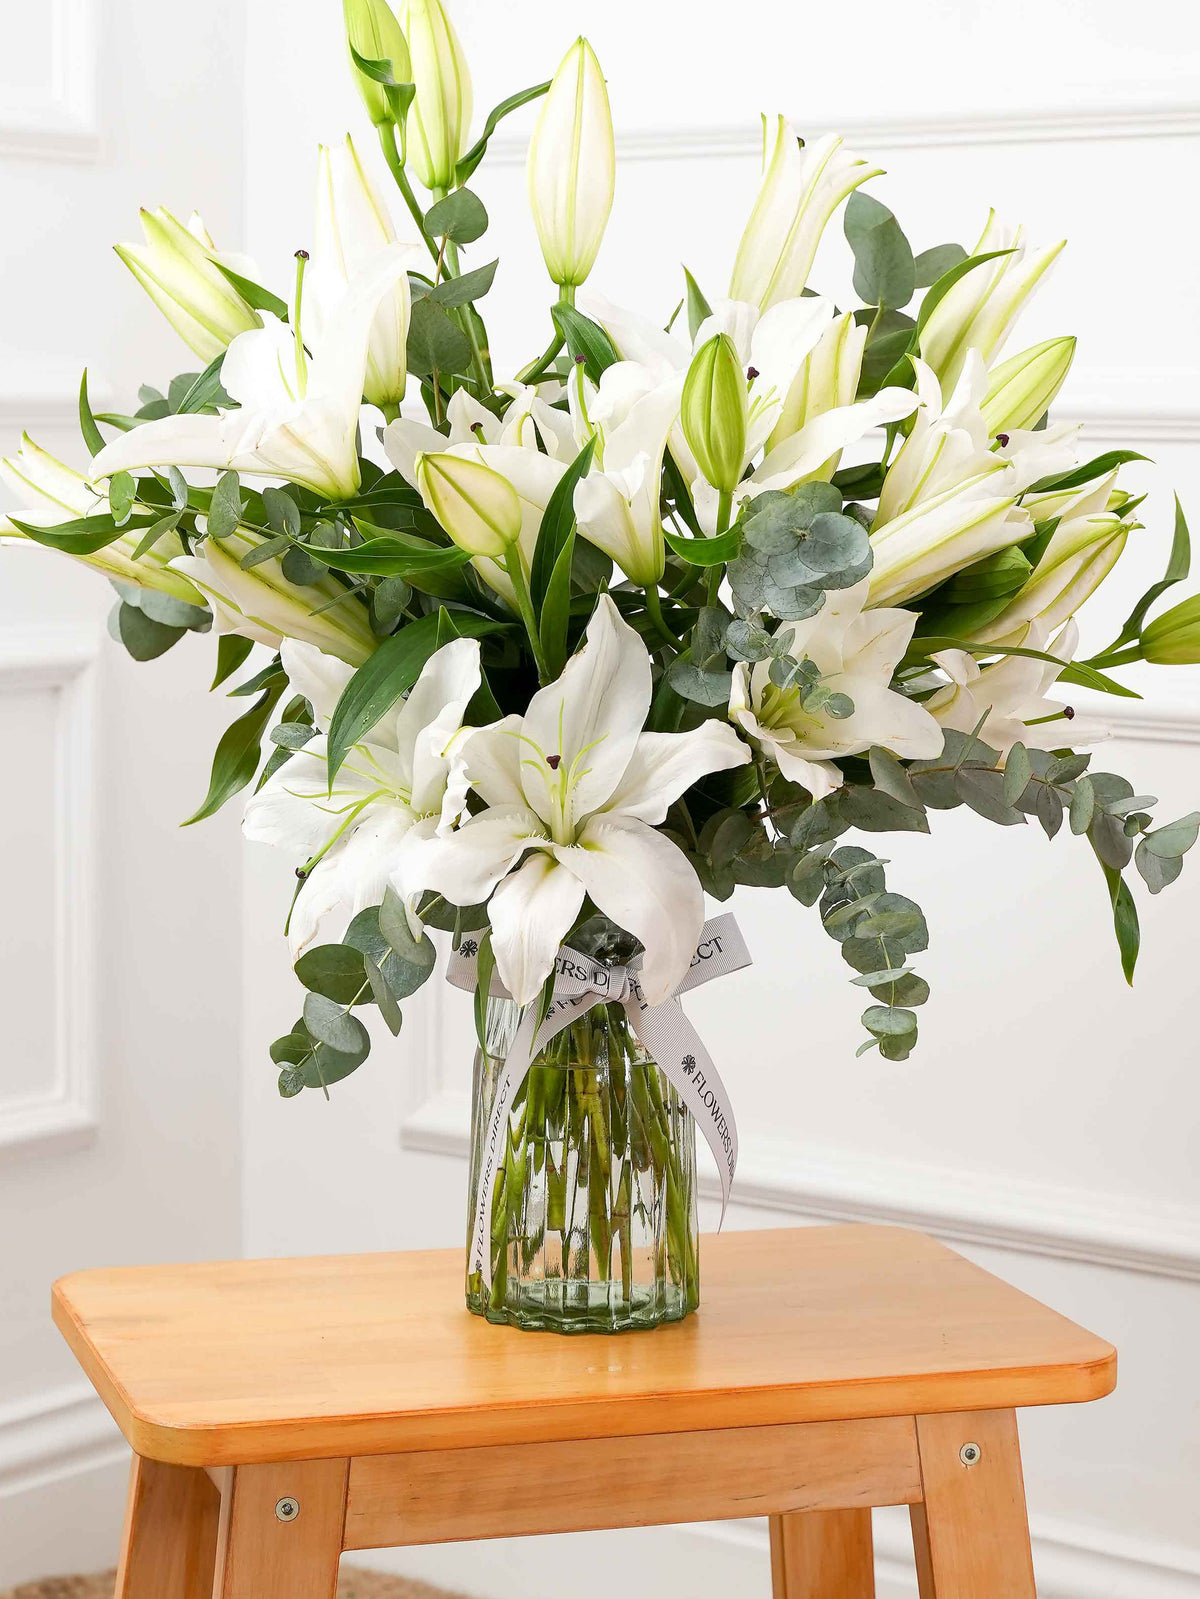 Sympathy White Lily in a vase